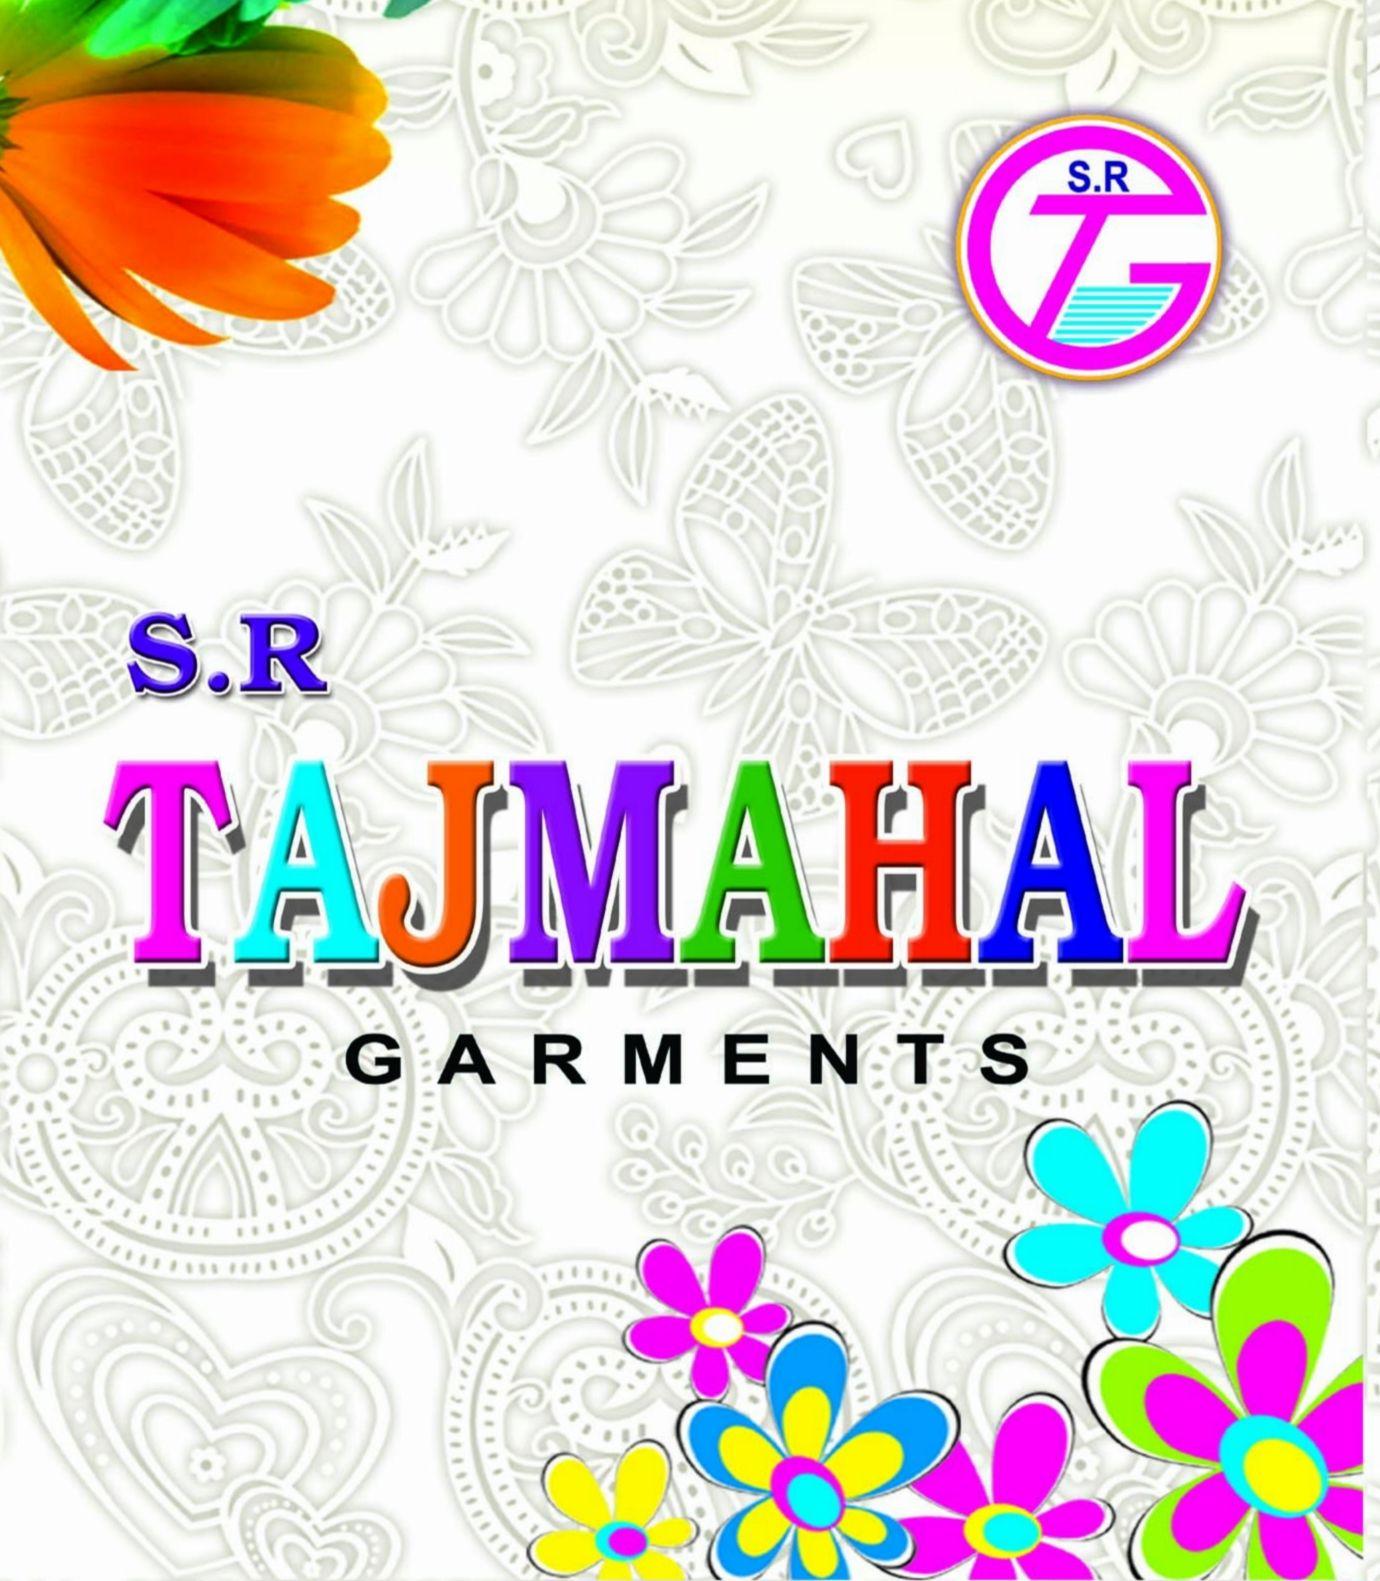 S. R. Tajmahal Garments